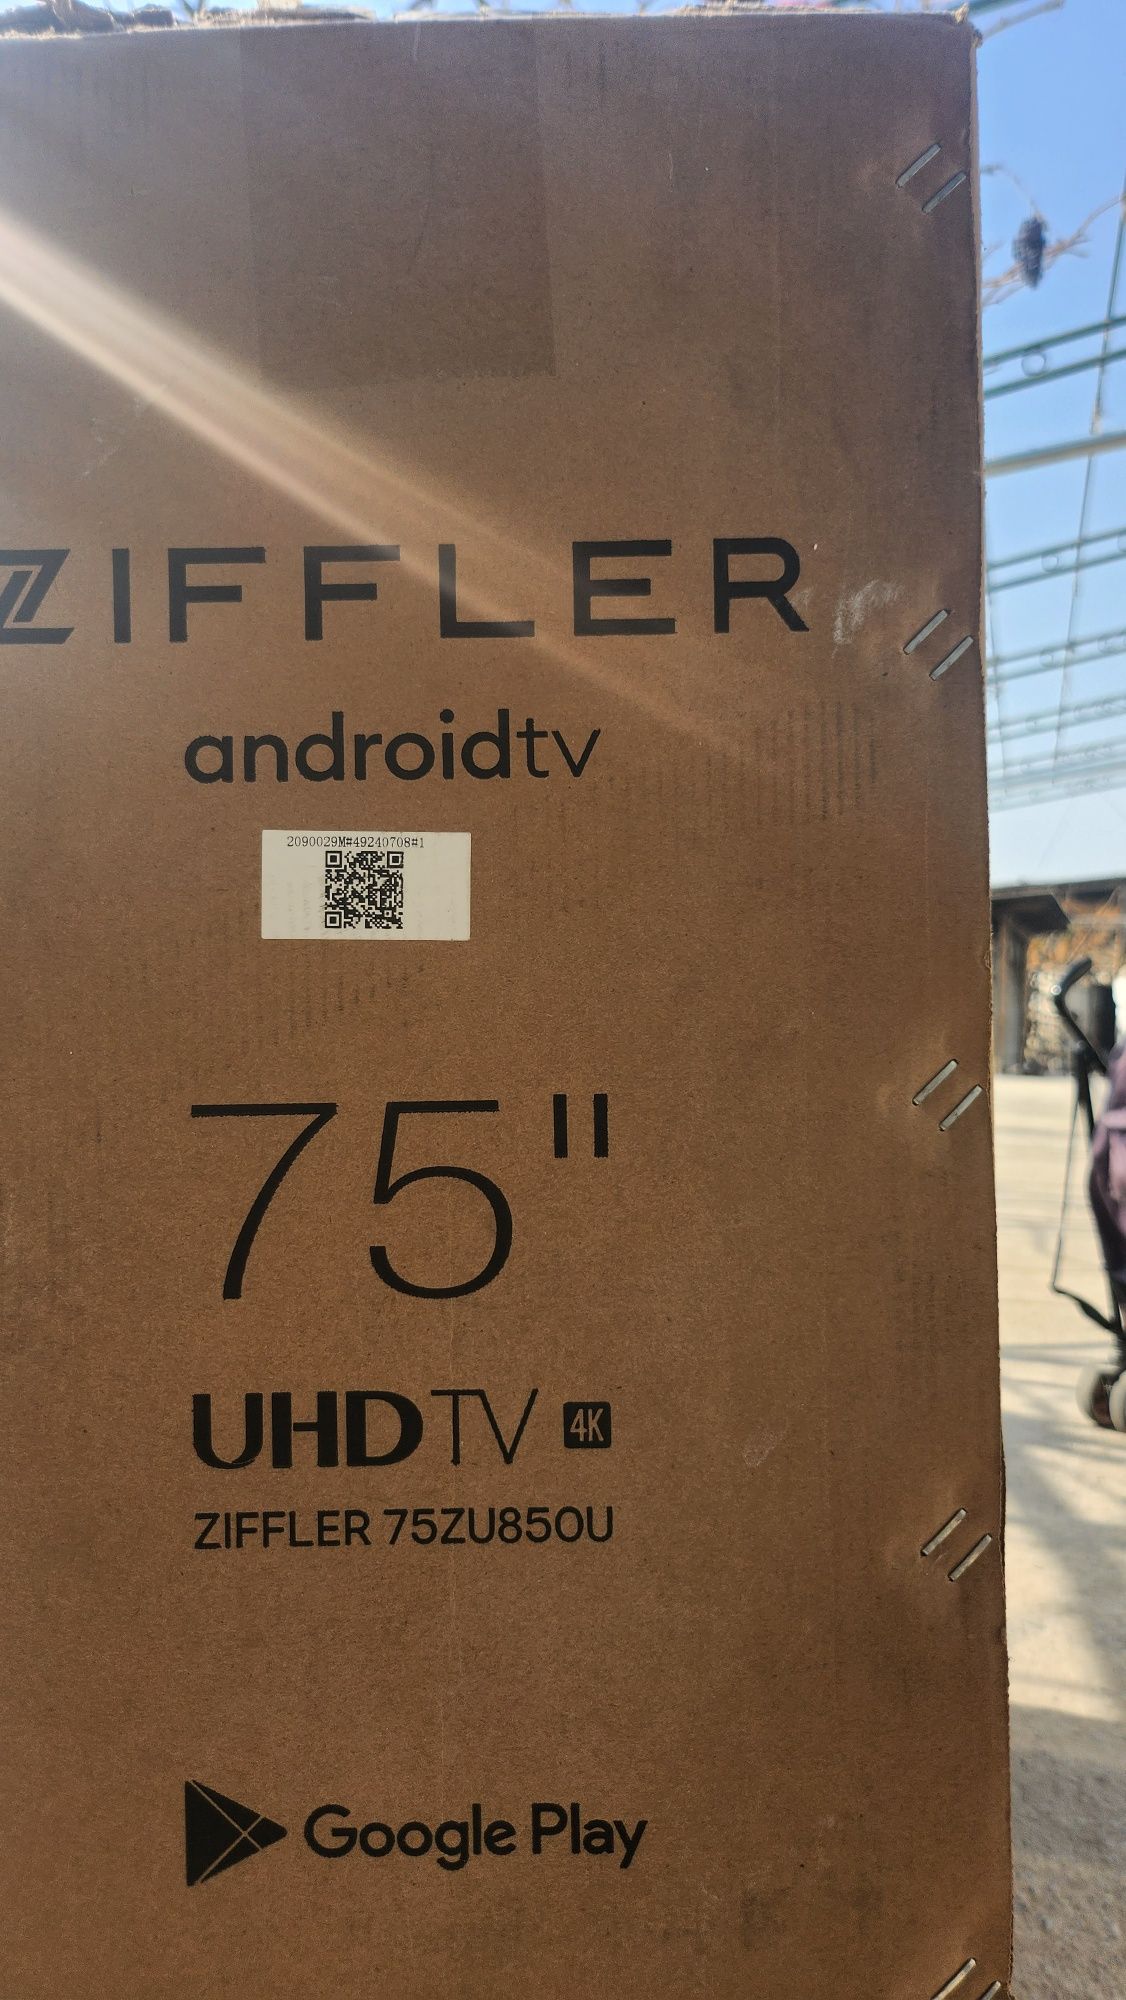 Ziffler 75 li 4k smart